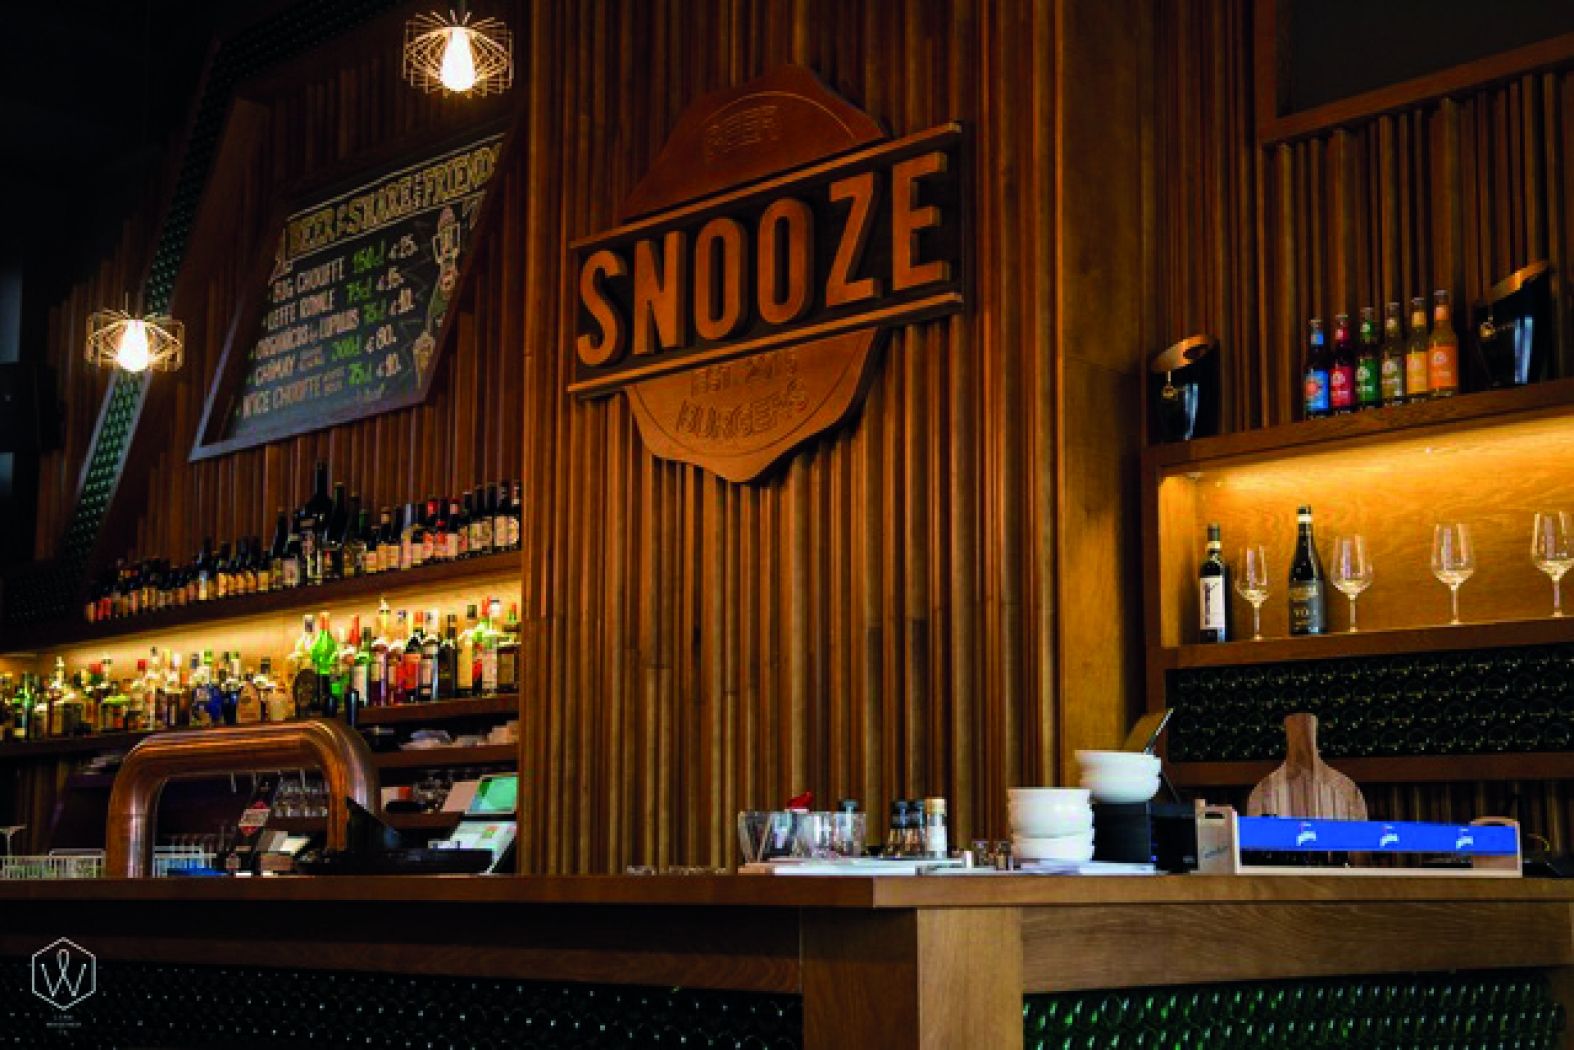 Restaurant Snooze Pub